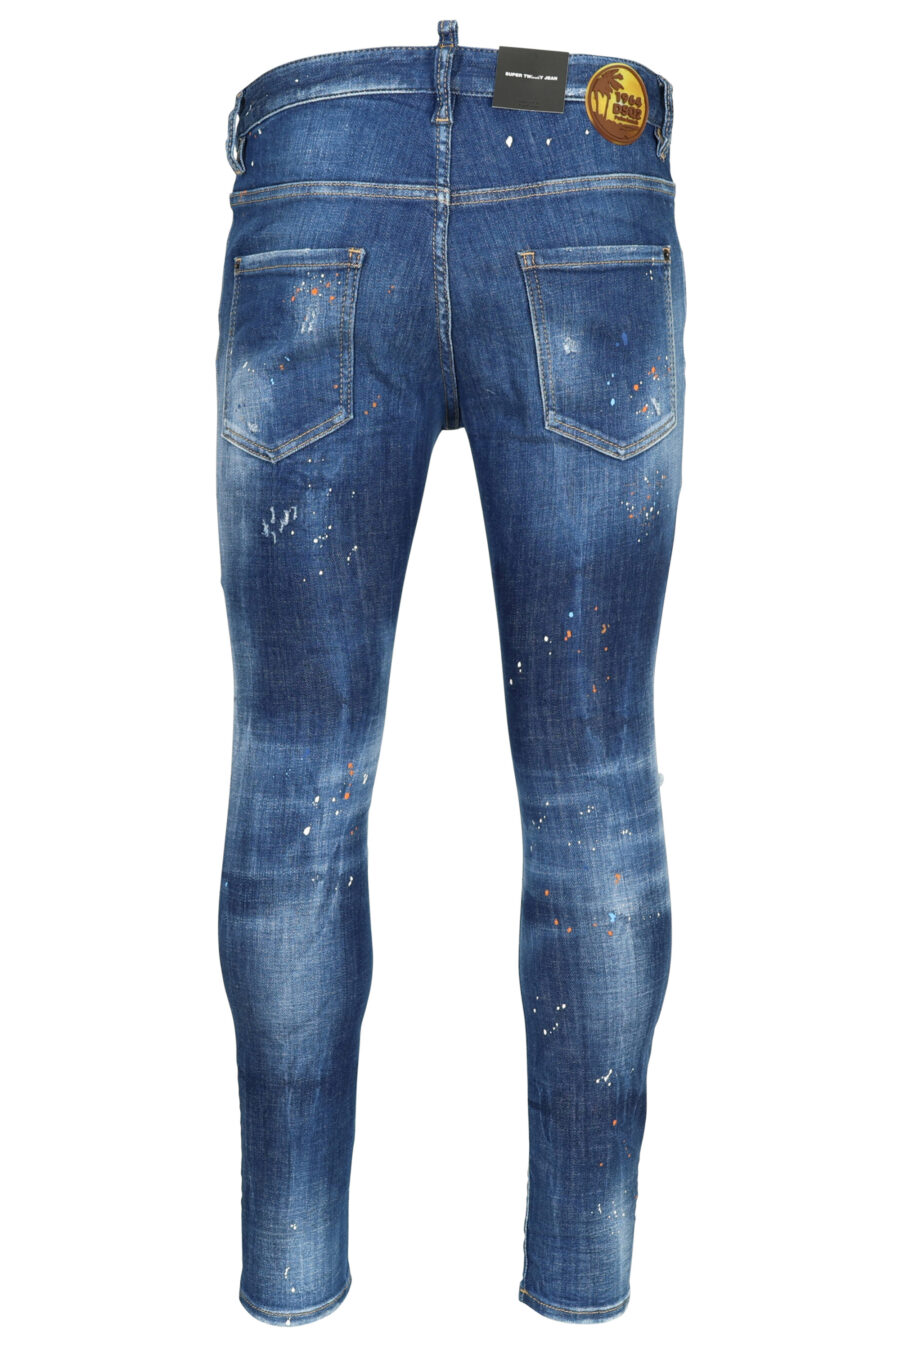 Pantalón vaquero azul "super twinky" desgastado con rotos - 8054148473228 2